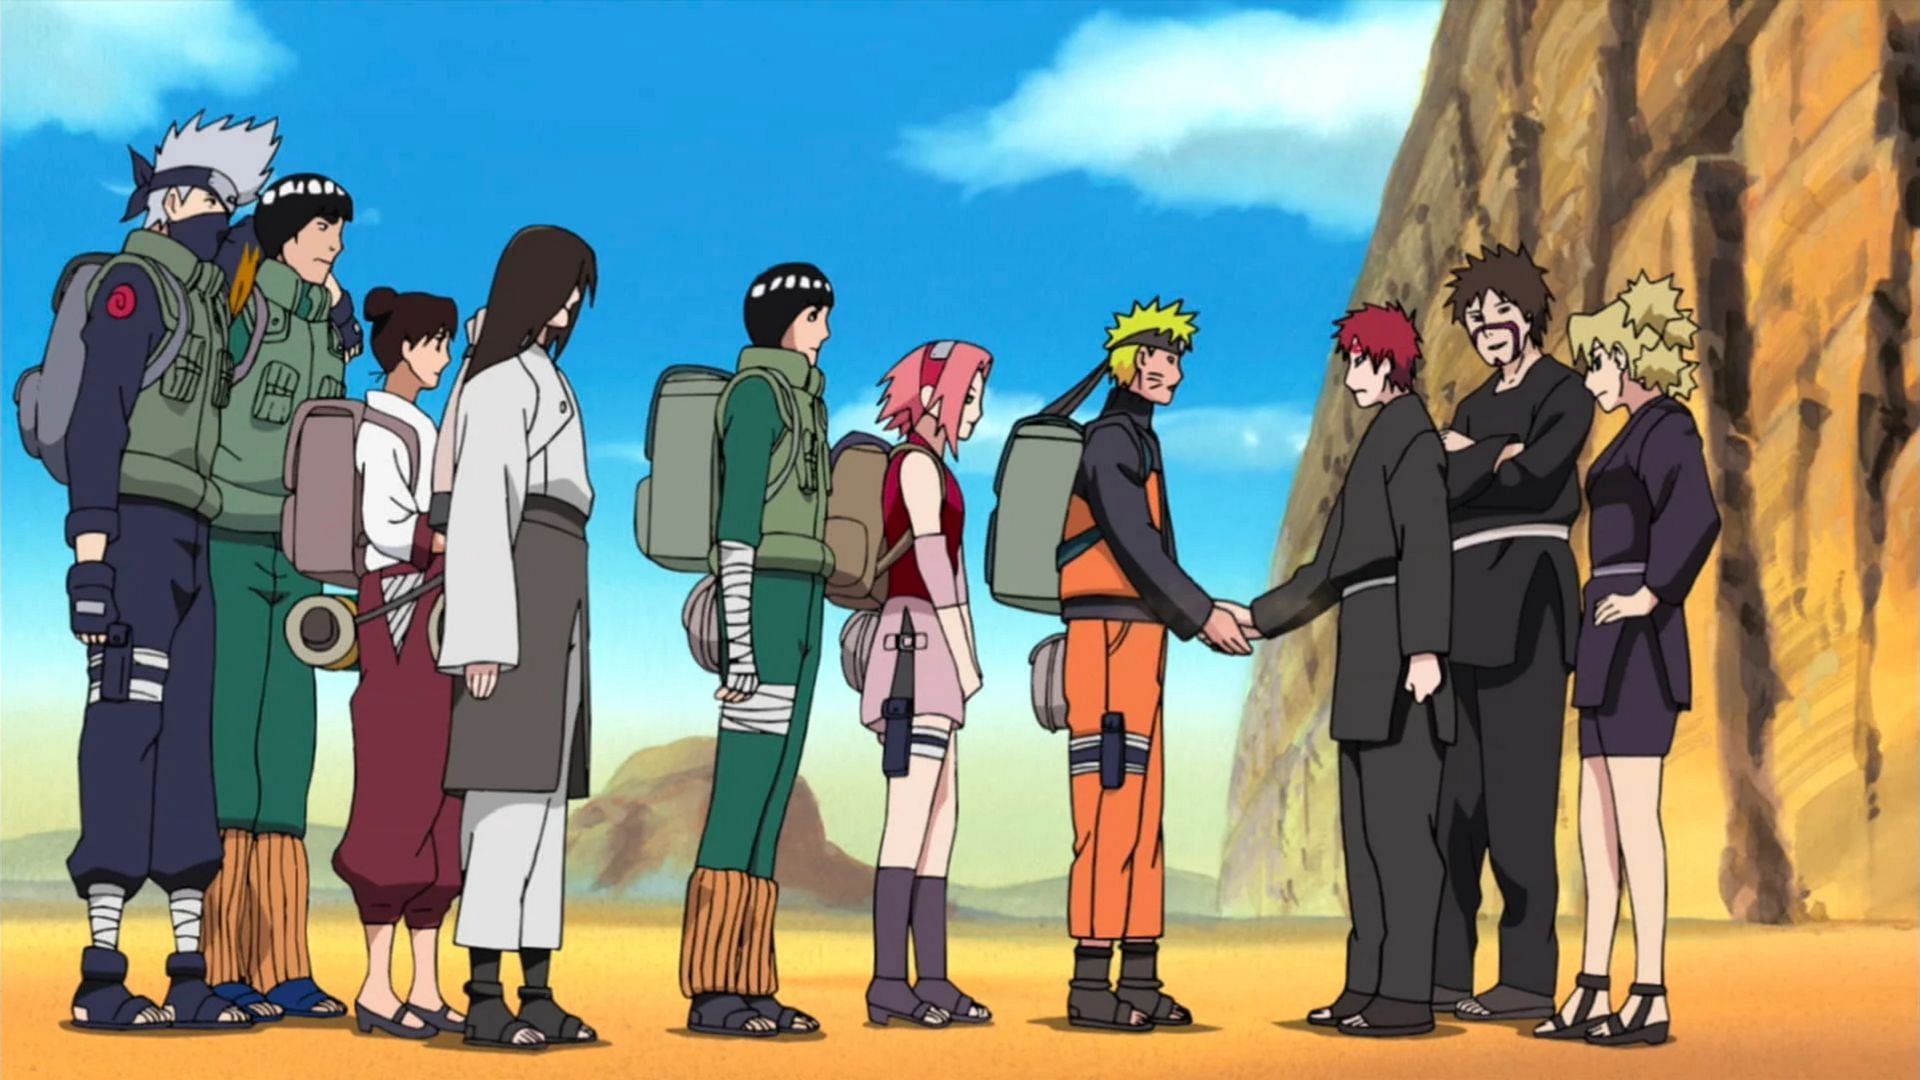 The Kazekage Rescue Arc marks the beginning of Naruto Shippuden (Image via Studio Pierrot, Naruto)